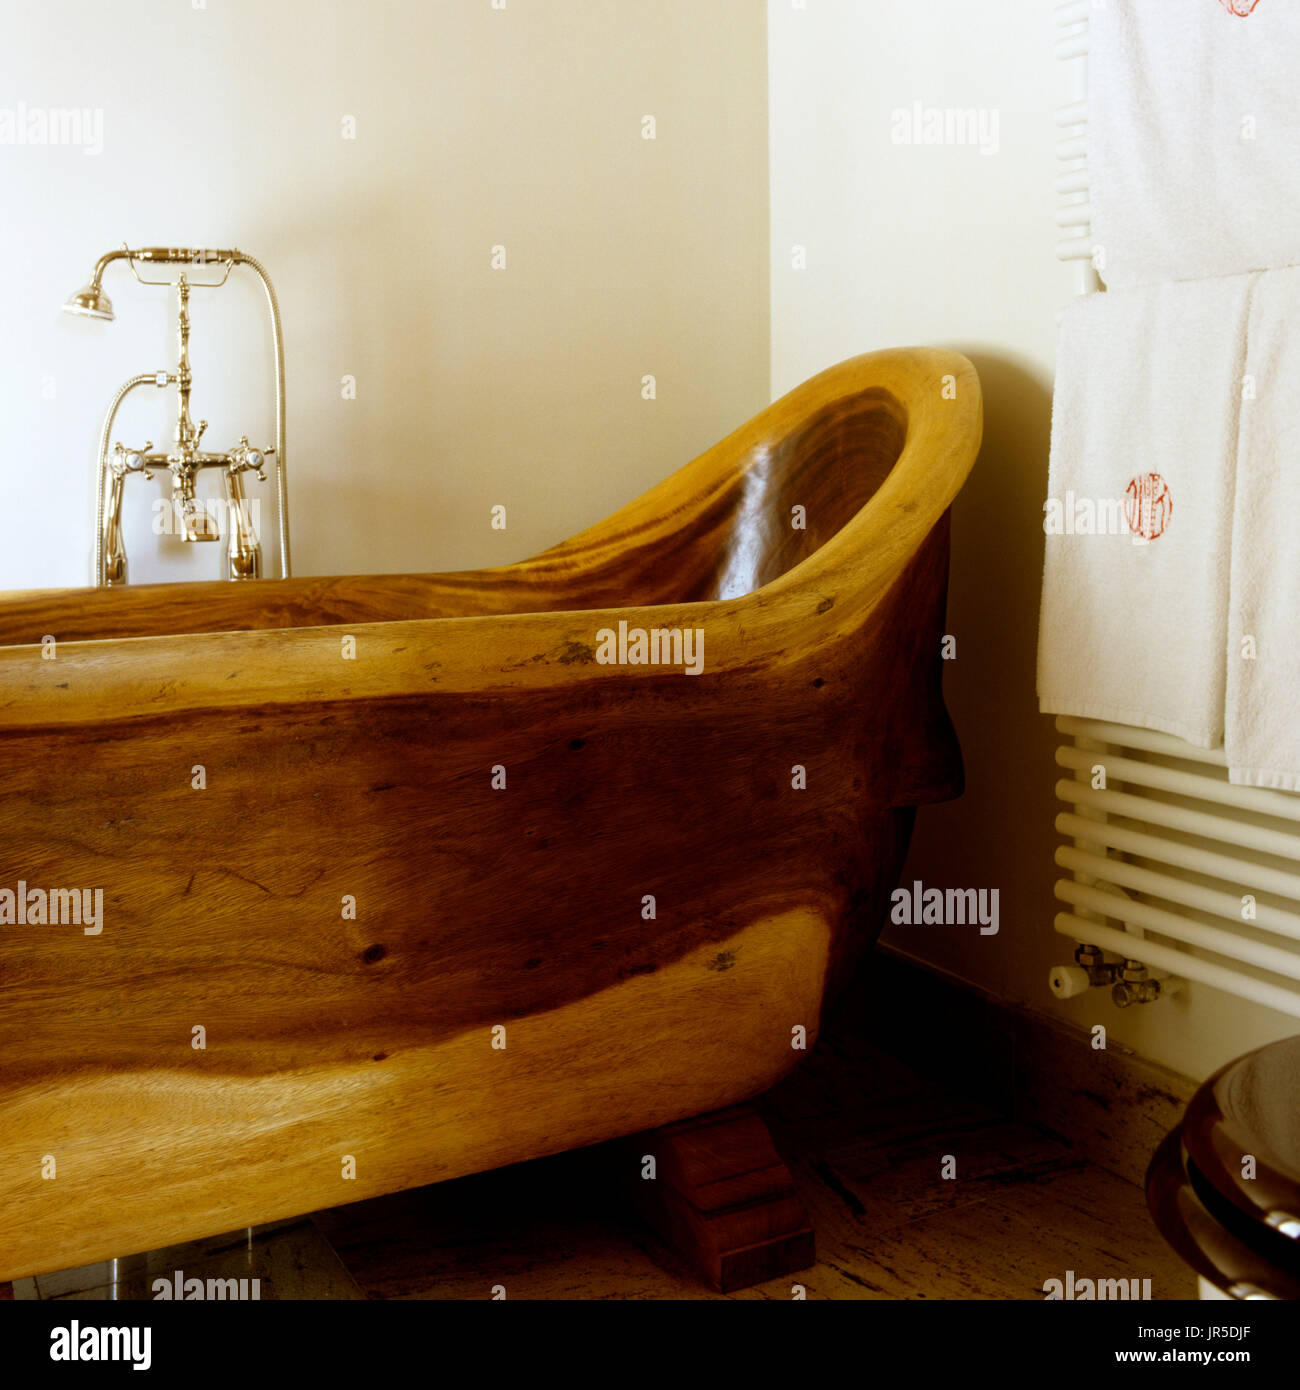 Rustic style bathtub Stock Photo